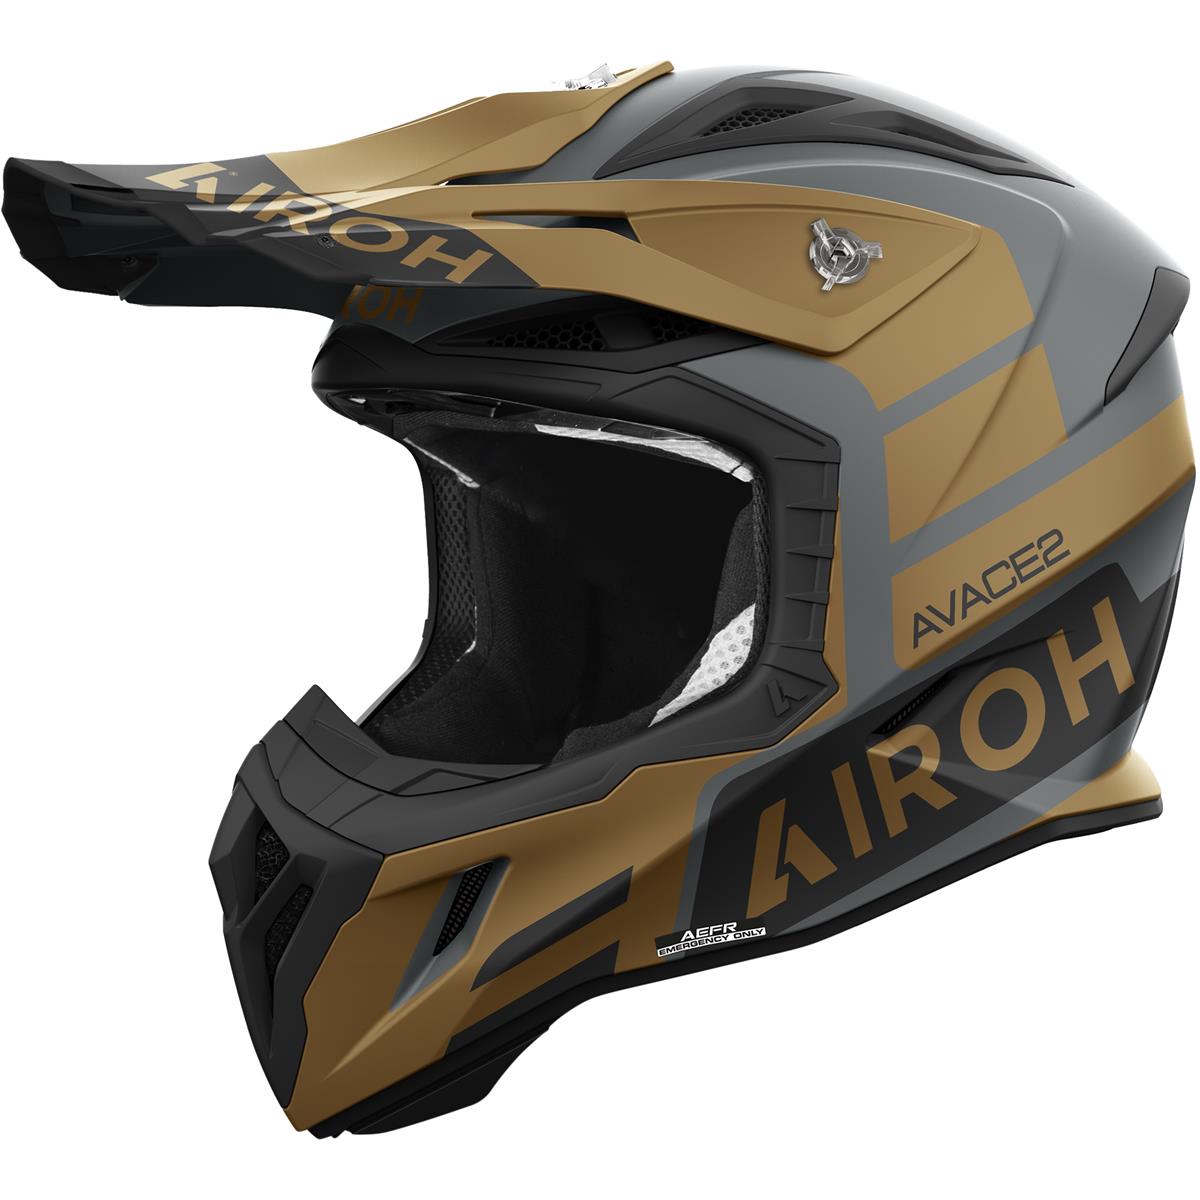 Airoh Motocross-Helm Aviator Ace 2 Sake - Gold Matt